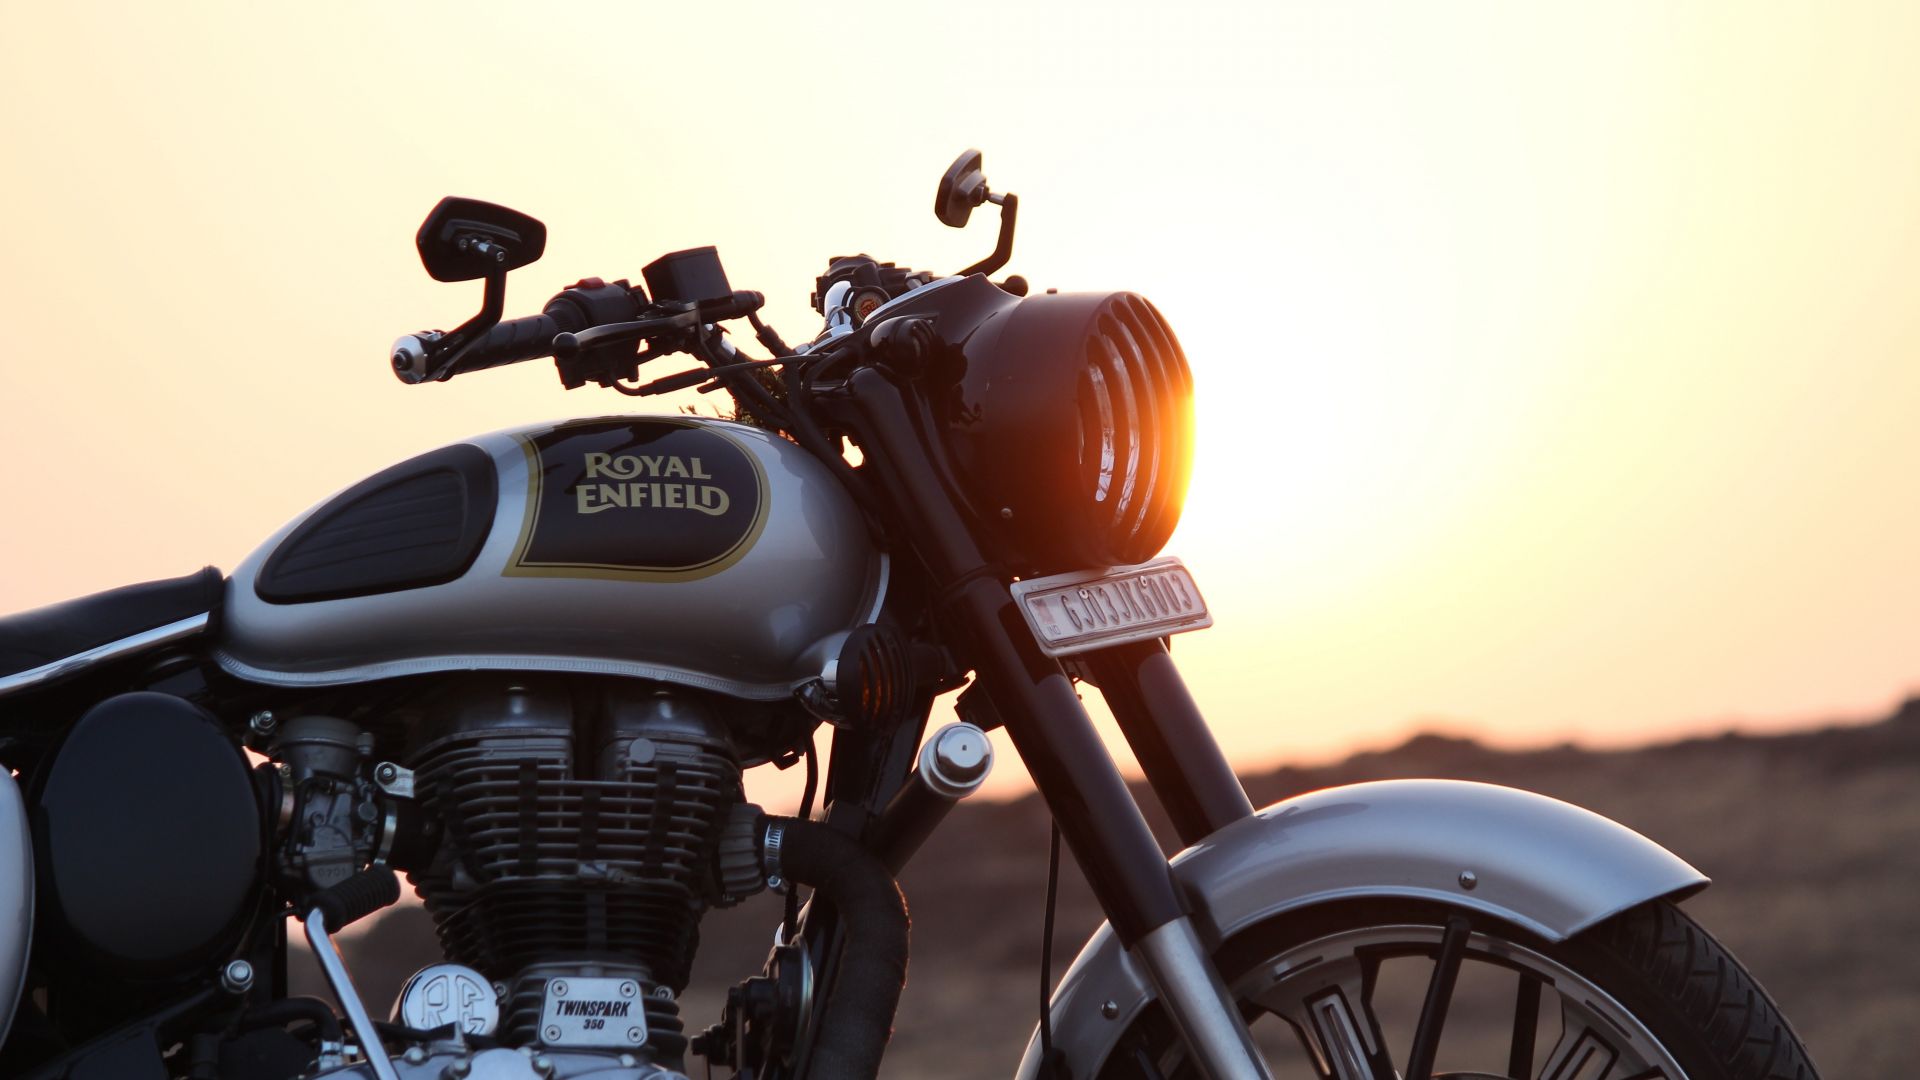 Wallpaper Royal enfield, motorcycle, 4k